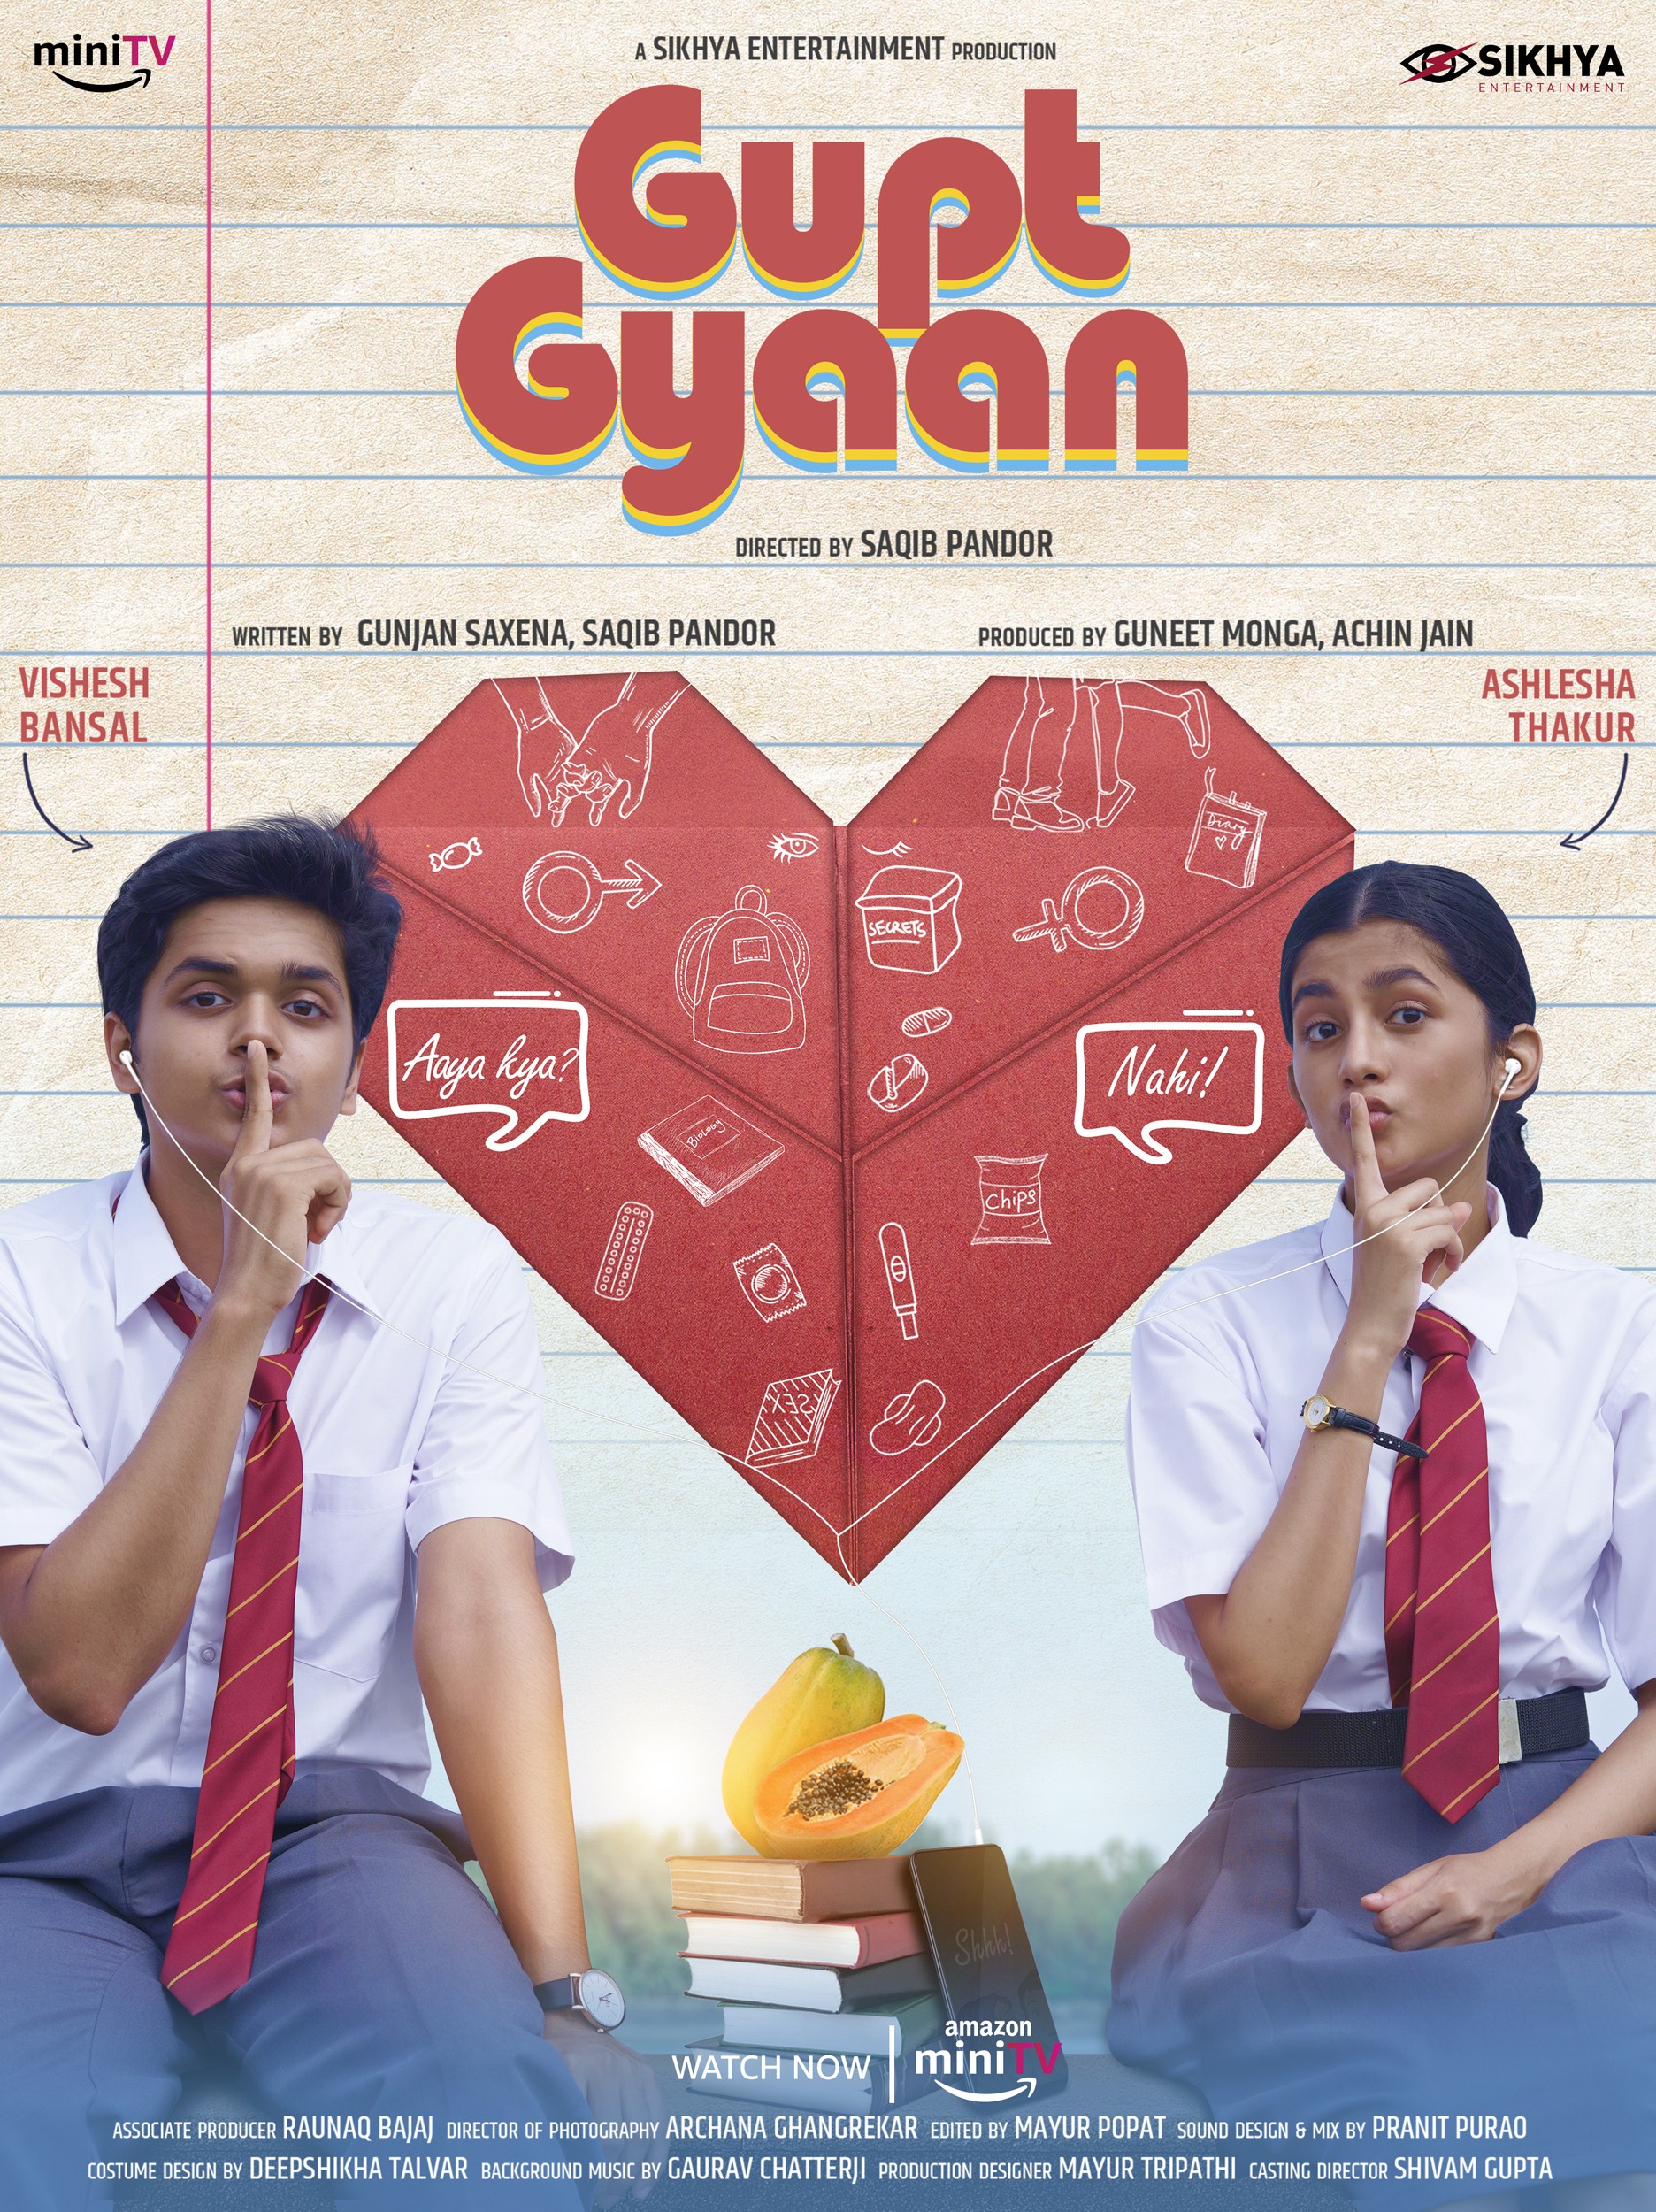 Mega Sized Movie Poster Image for Gupt Gyaan